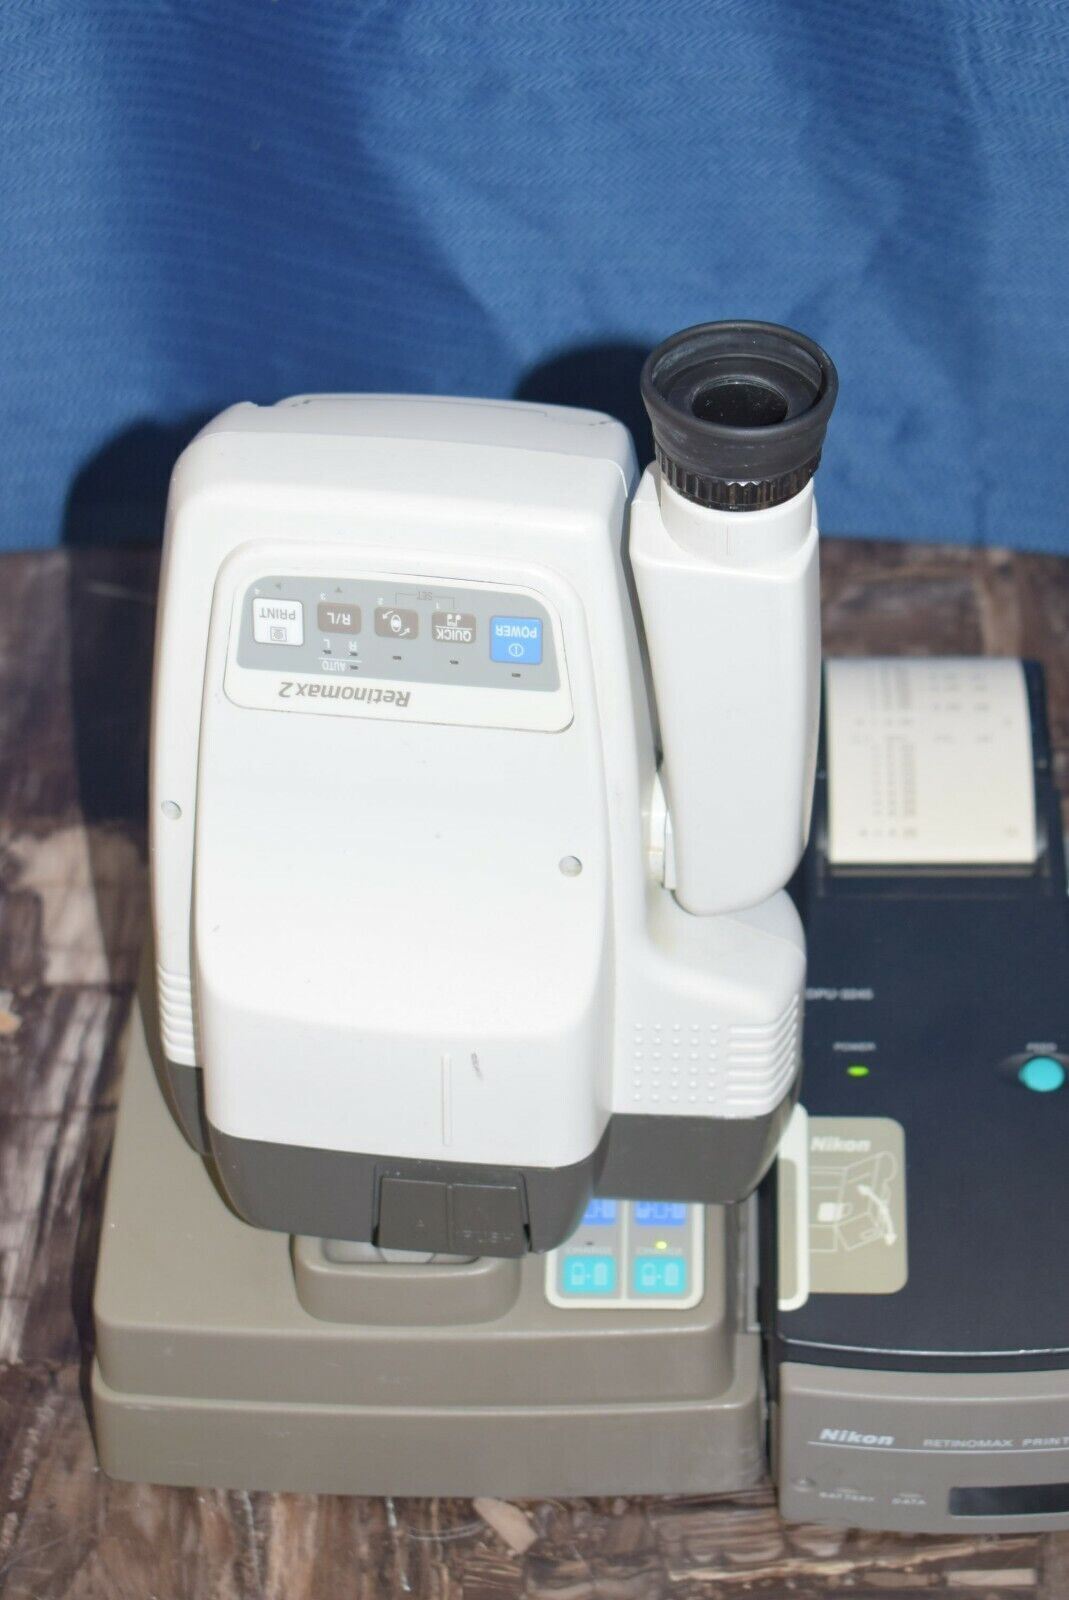 Righton/Nikon Retinomax 2 autorefractor with charger and printer